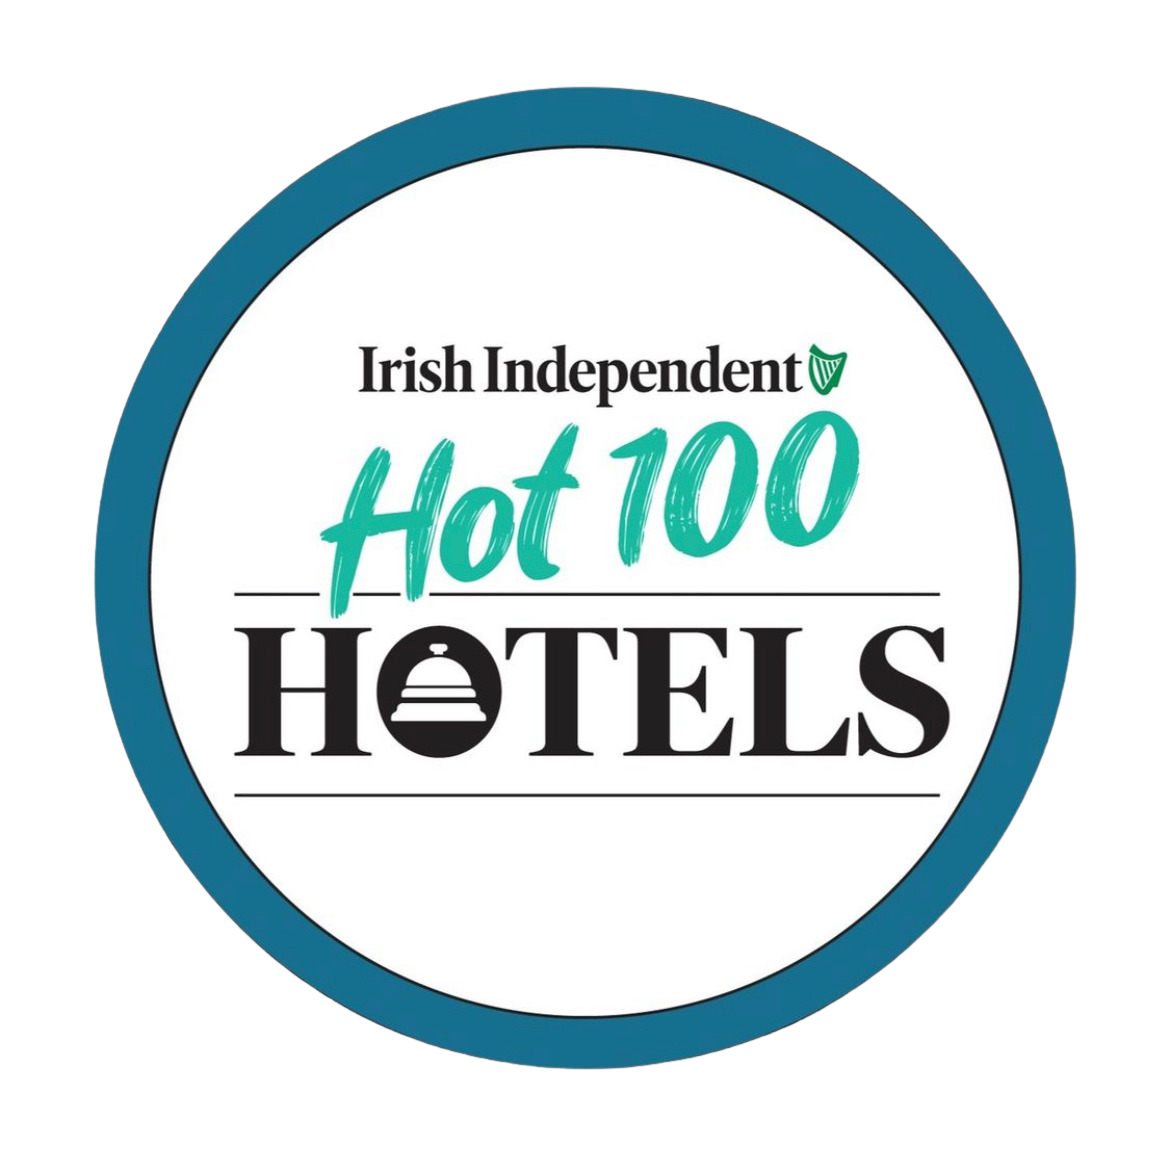 Top 100 Hotels